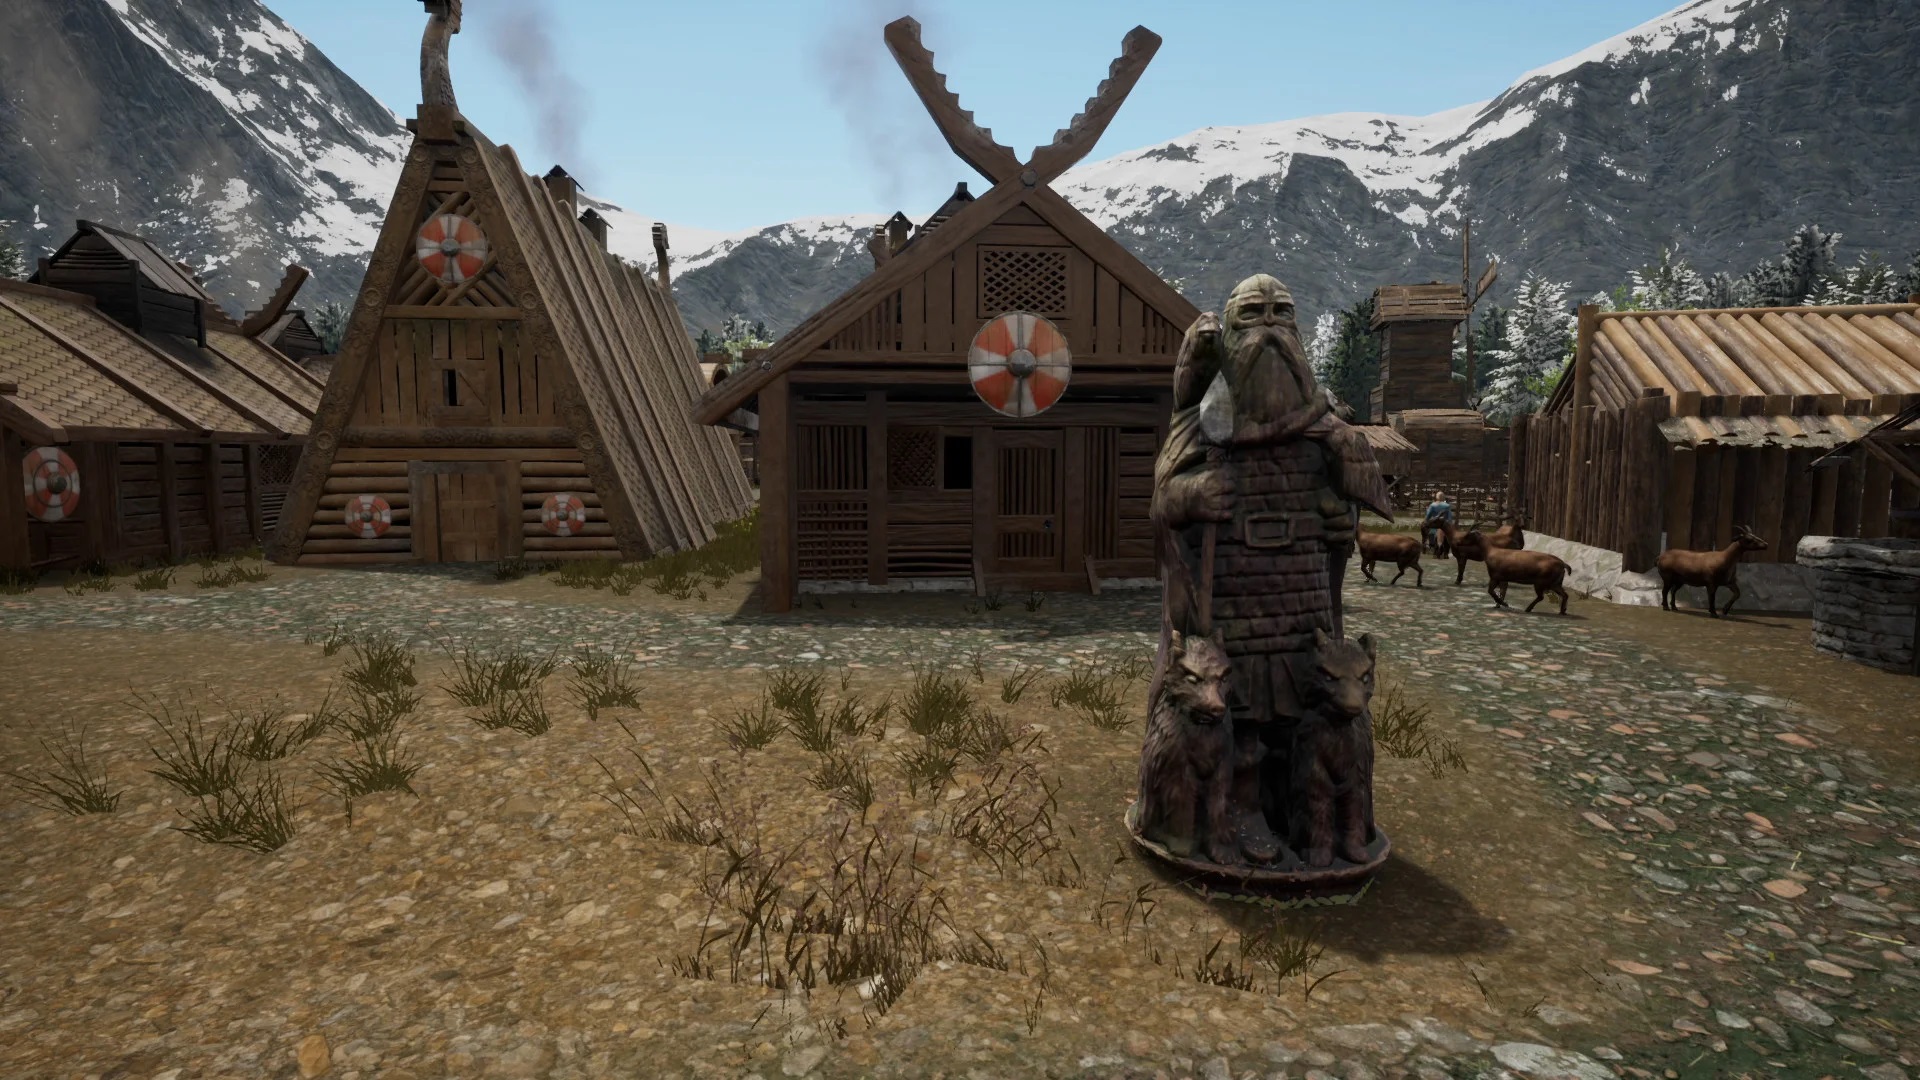 Vikings Village: Party Hard - 🕹️ Online Game